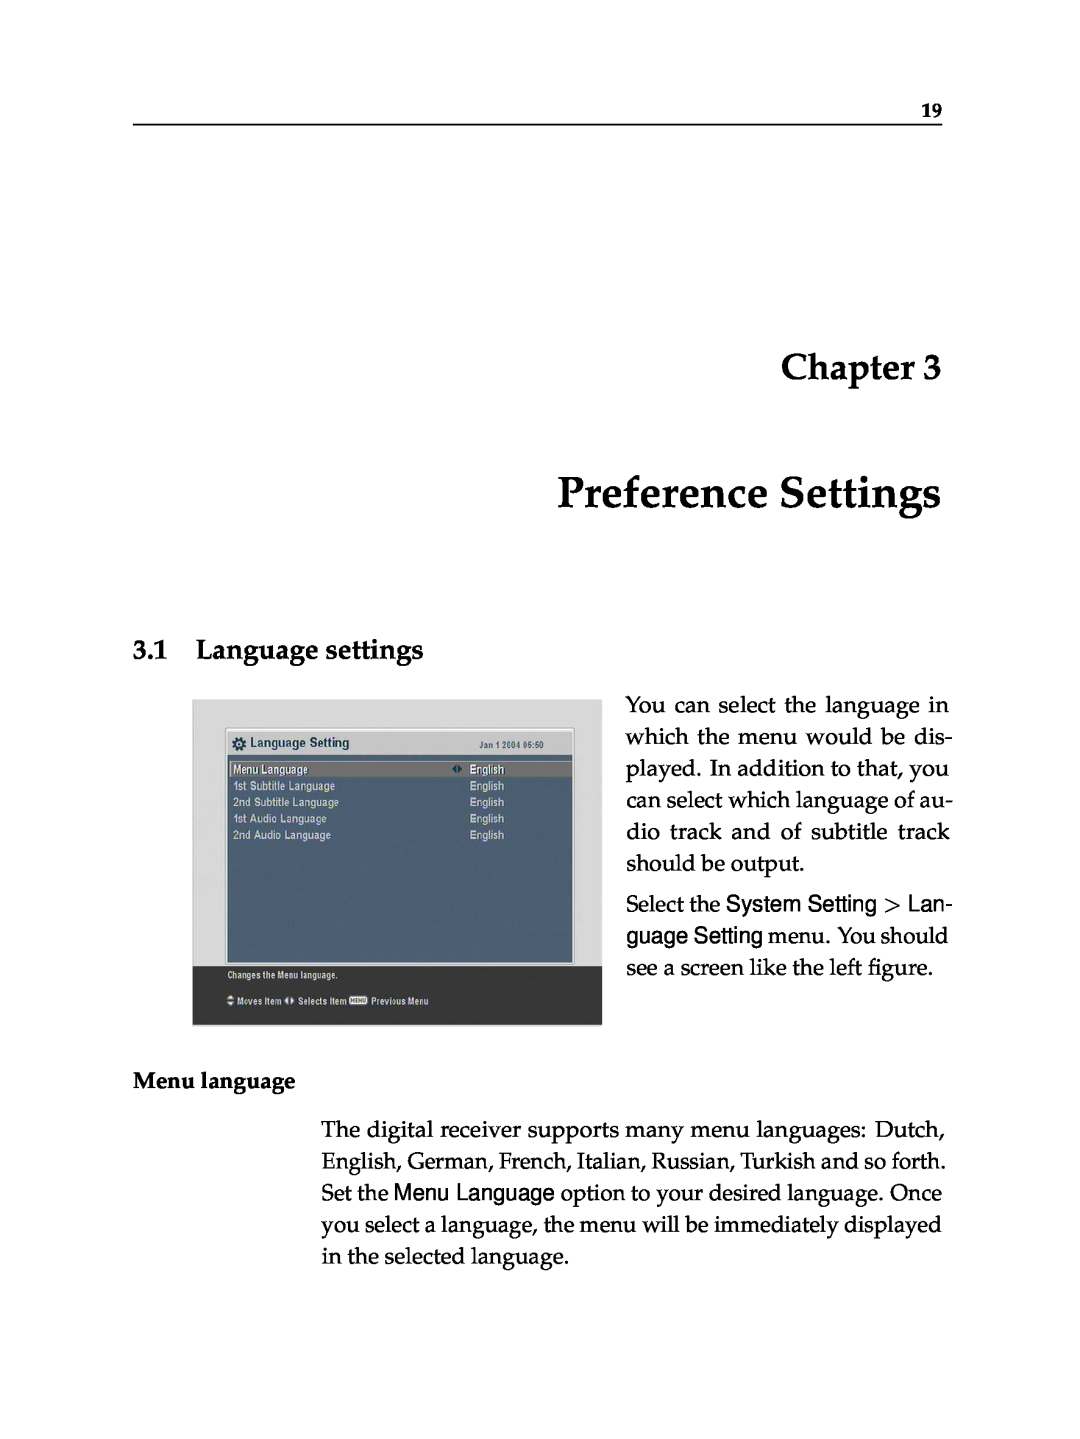 Topfield TF 6000 PVR ES manual Preference Settings, Language settings, Menu language, Chapter 